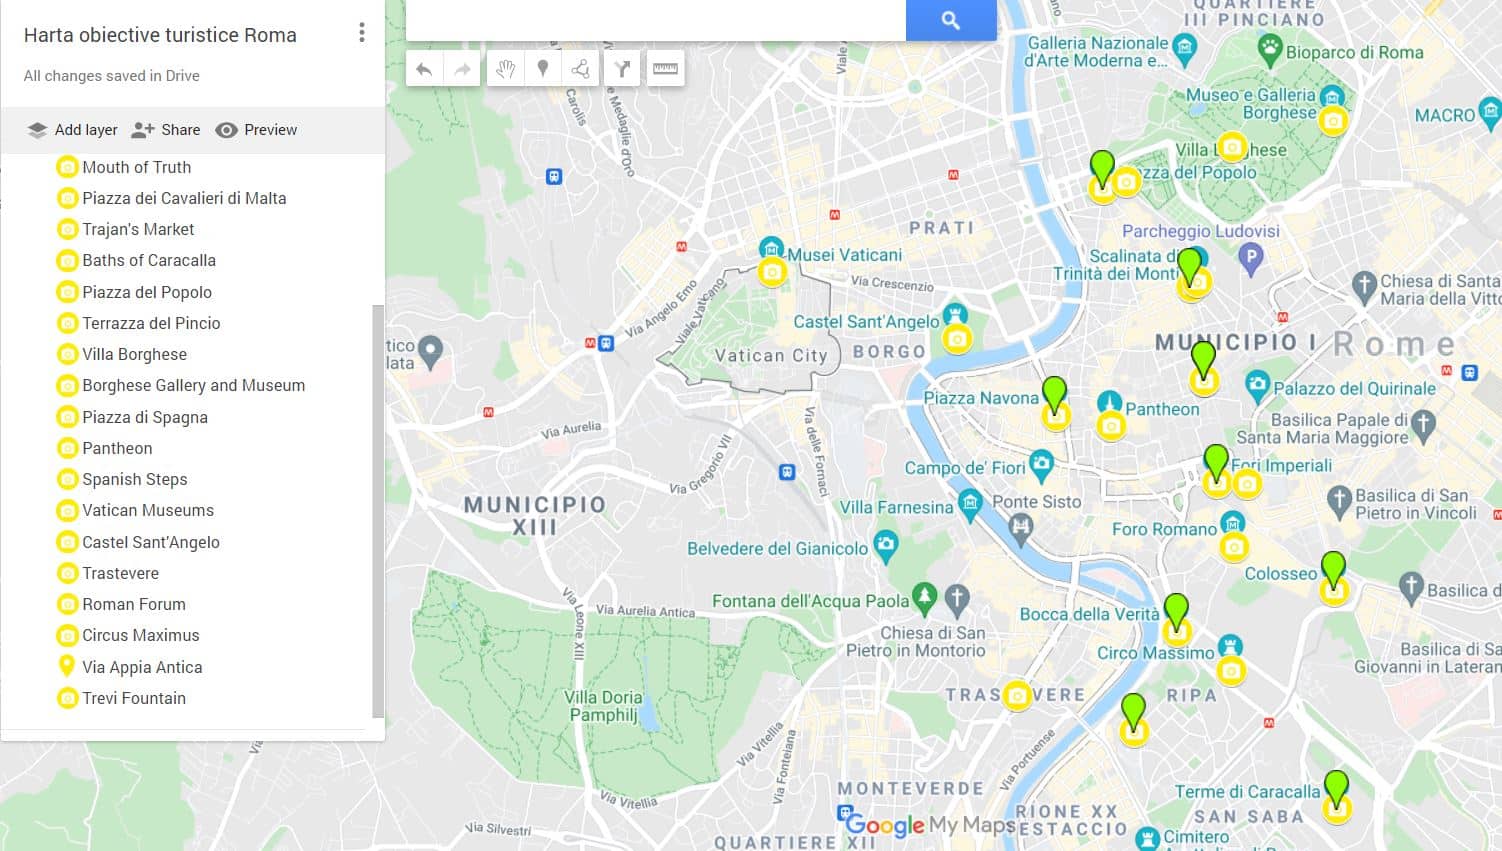 Harta obiective turistice Roma